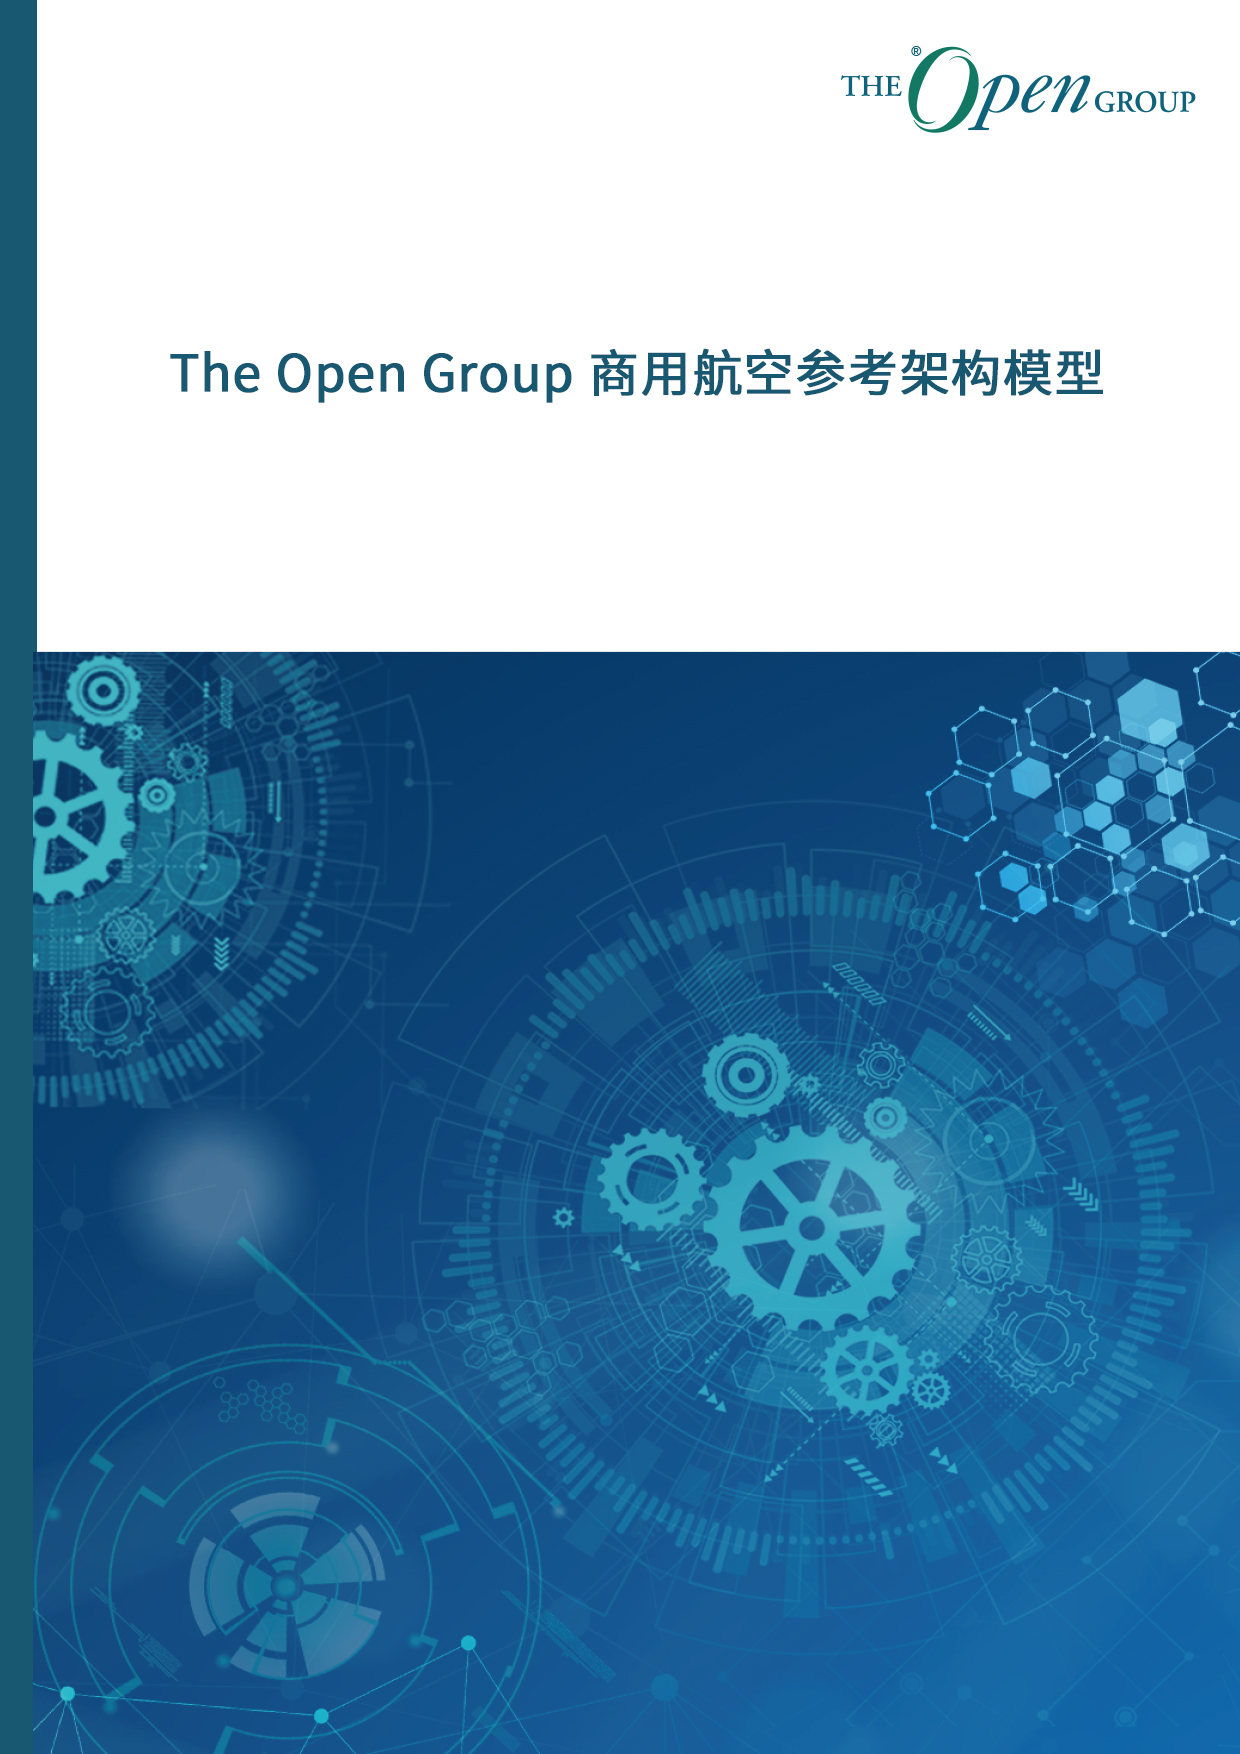 The Open Group 商用航空参考架构模型